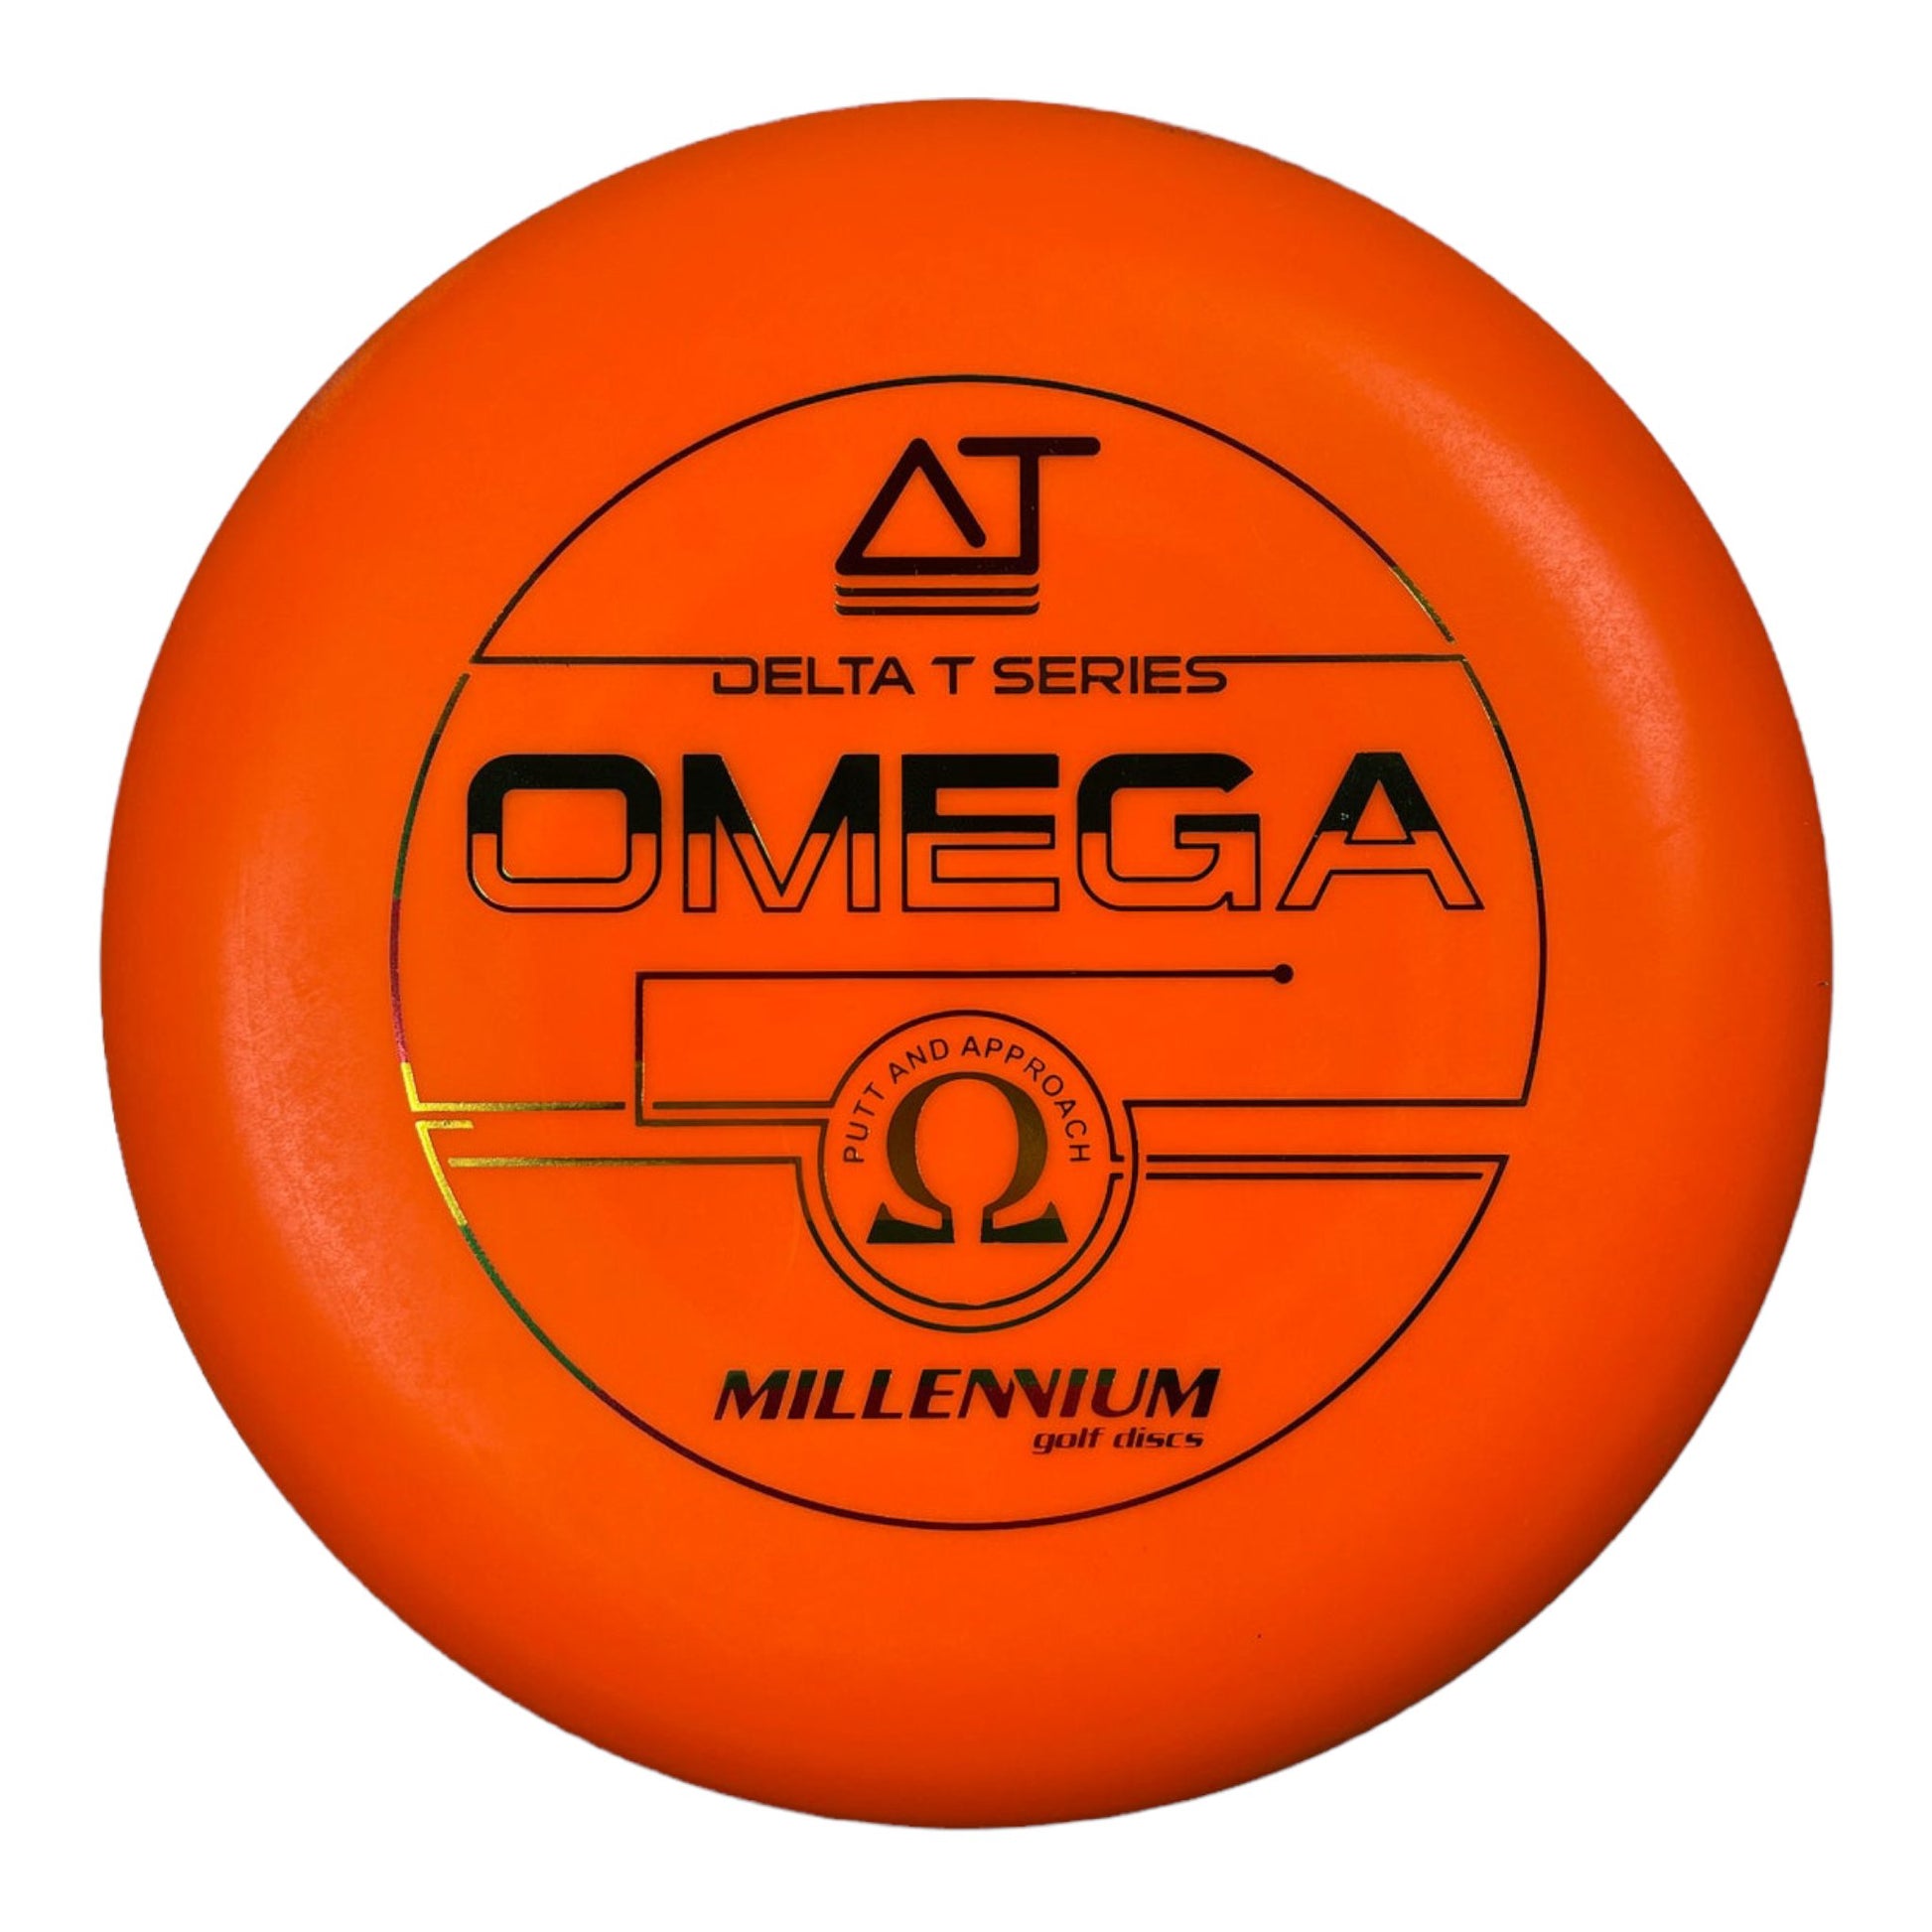 Millennium Golf Discs Omega | DT | Orange/Rasta 175g Disc Golf